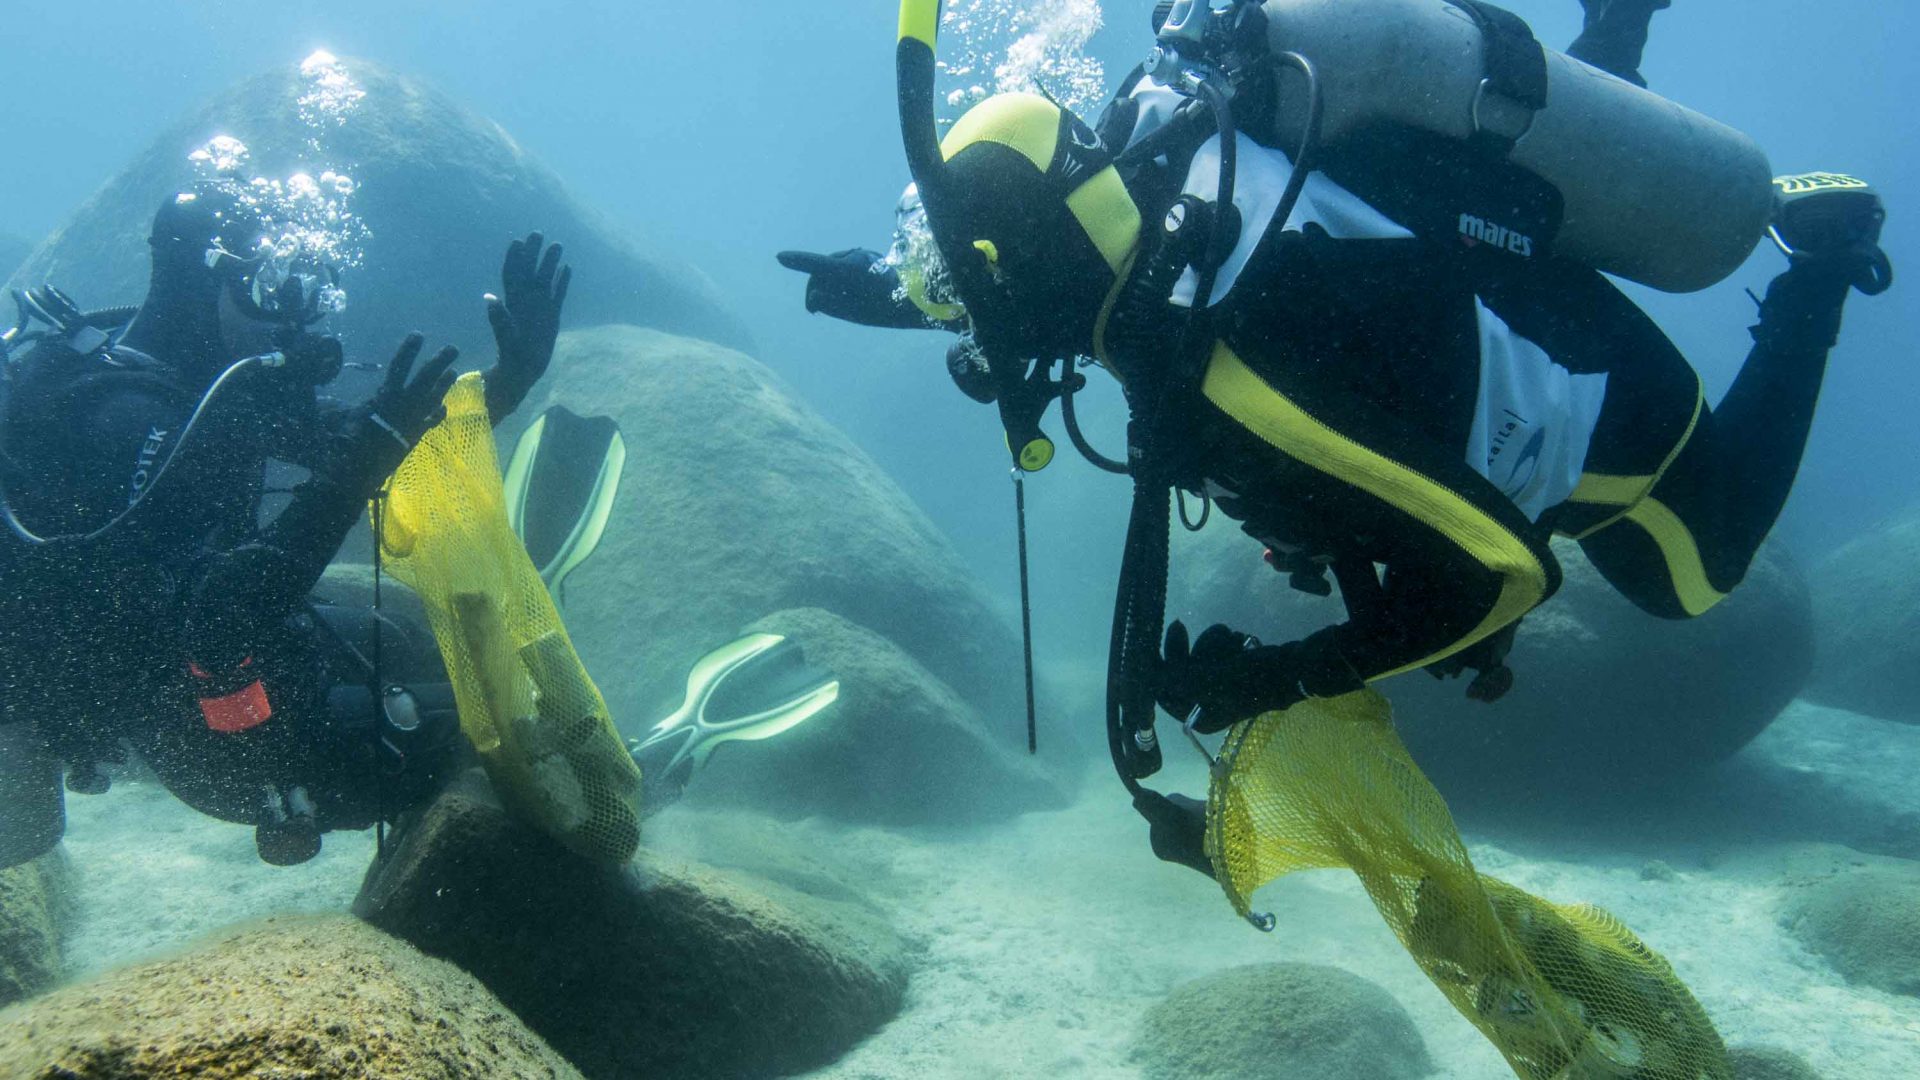 Divers work underwater looking for trash.